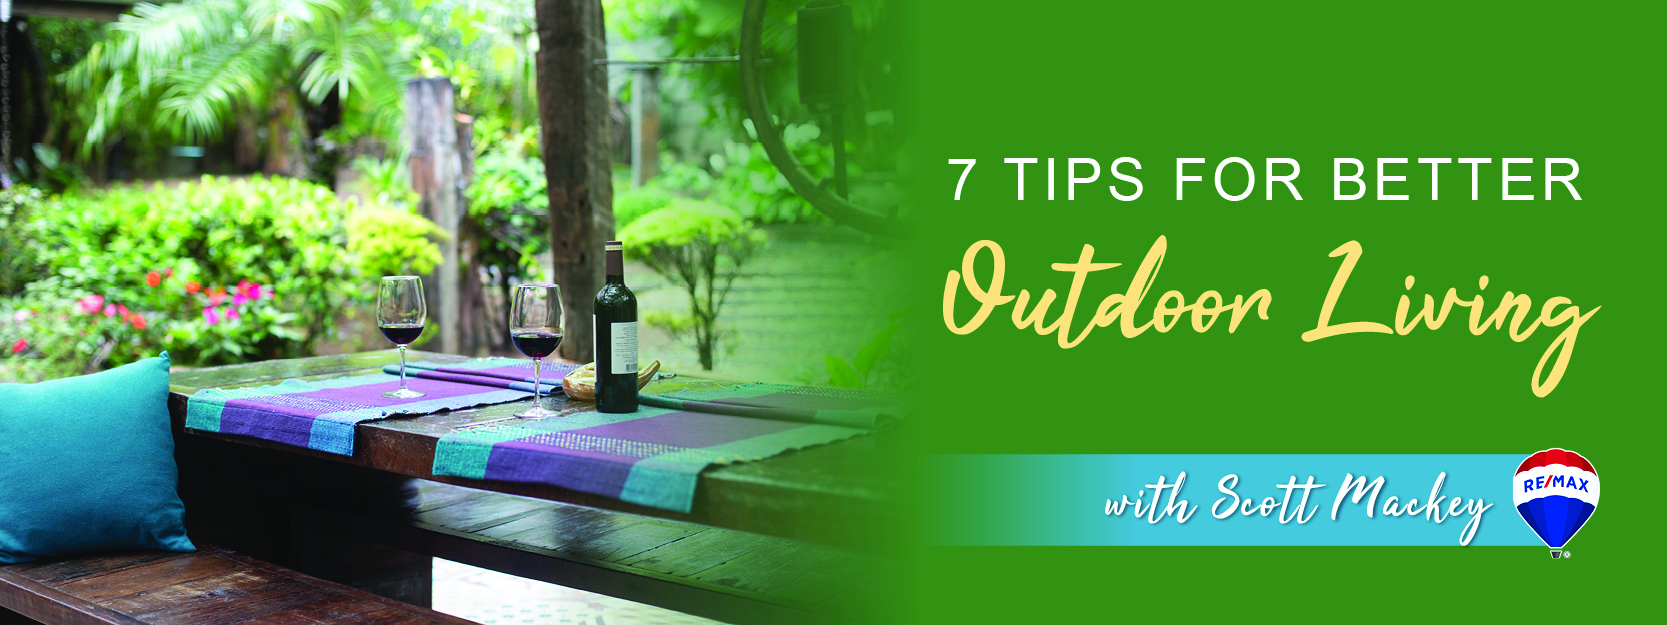 7 Tips for Better Outdoor Living